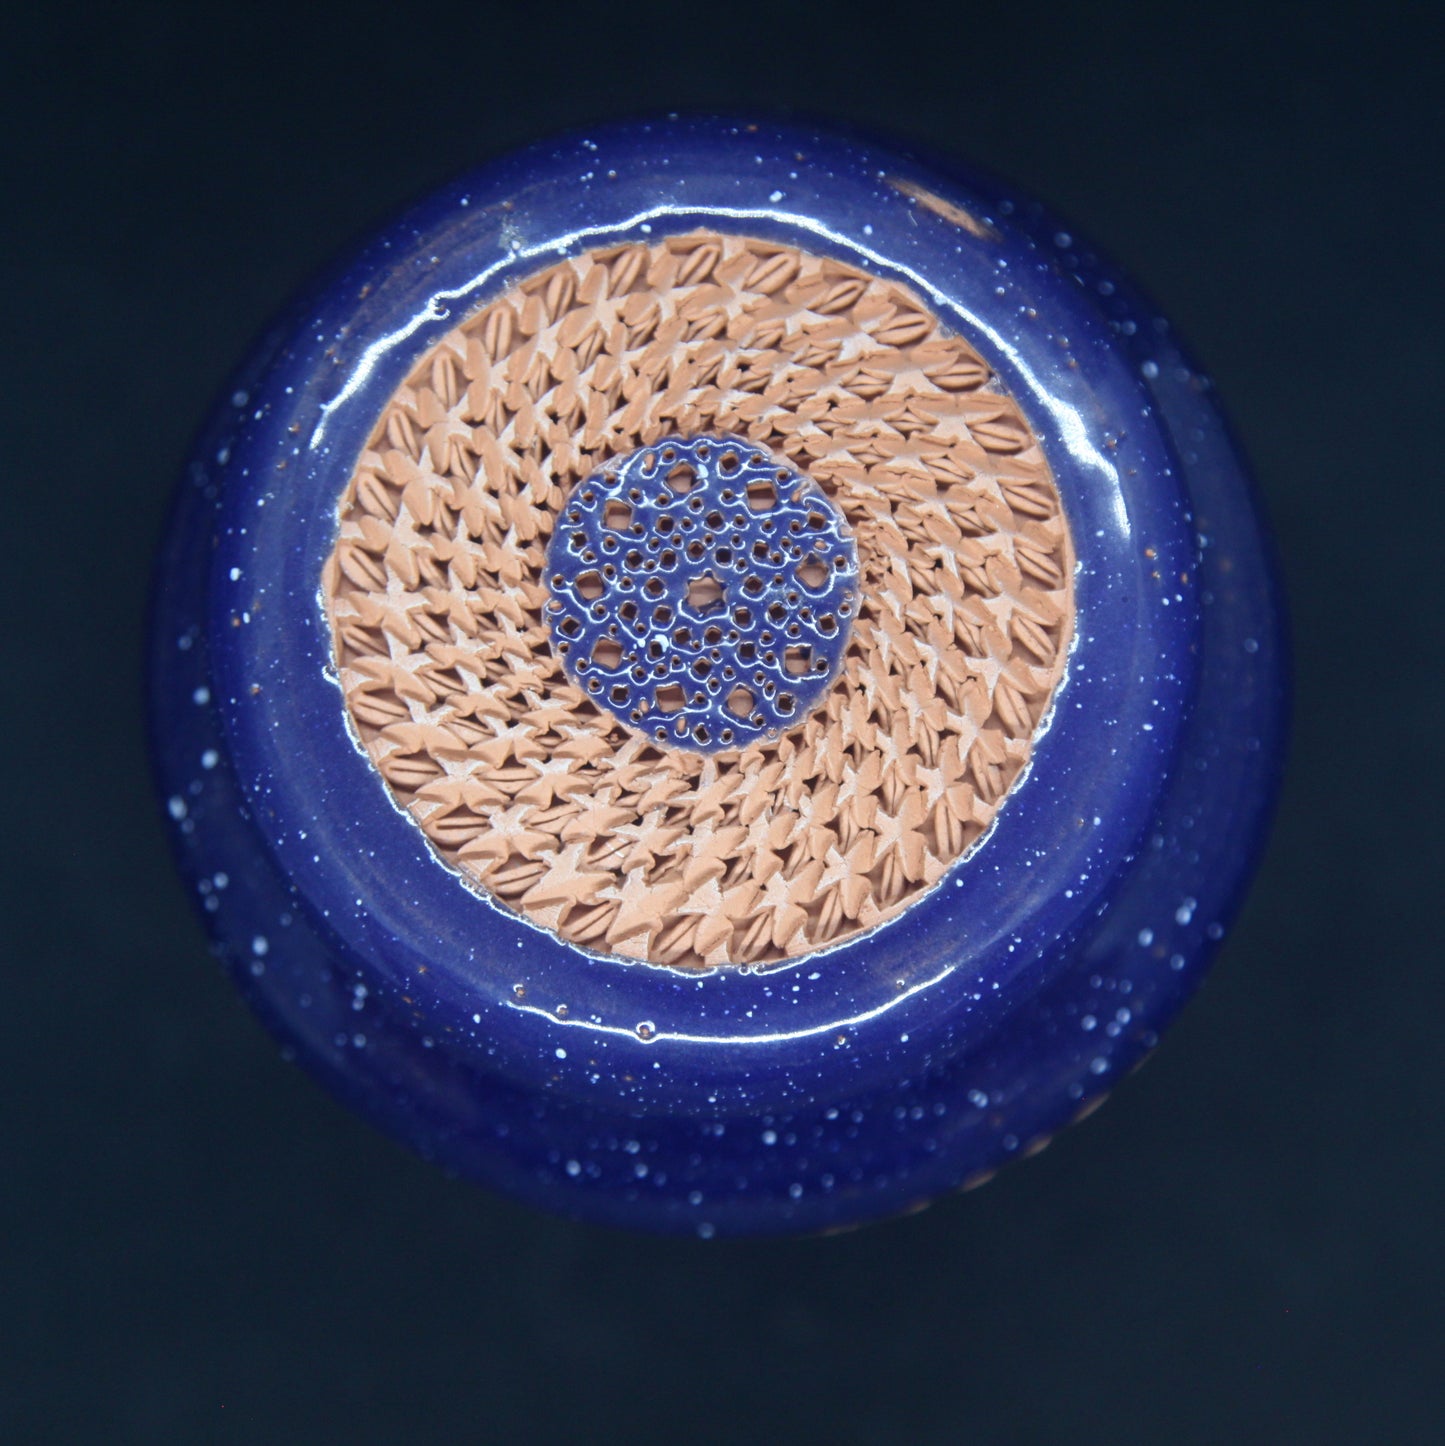 Galaxy blue tea box on red clay - braiding pattern